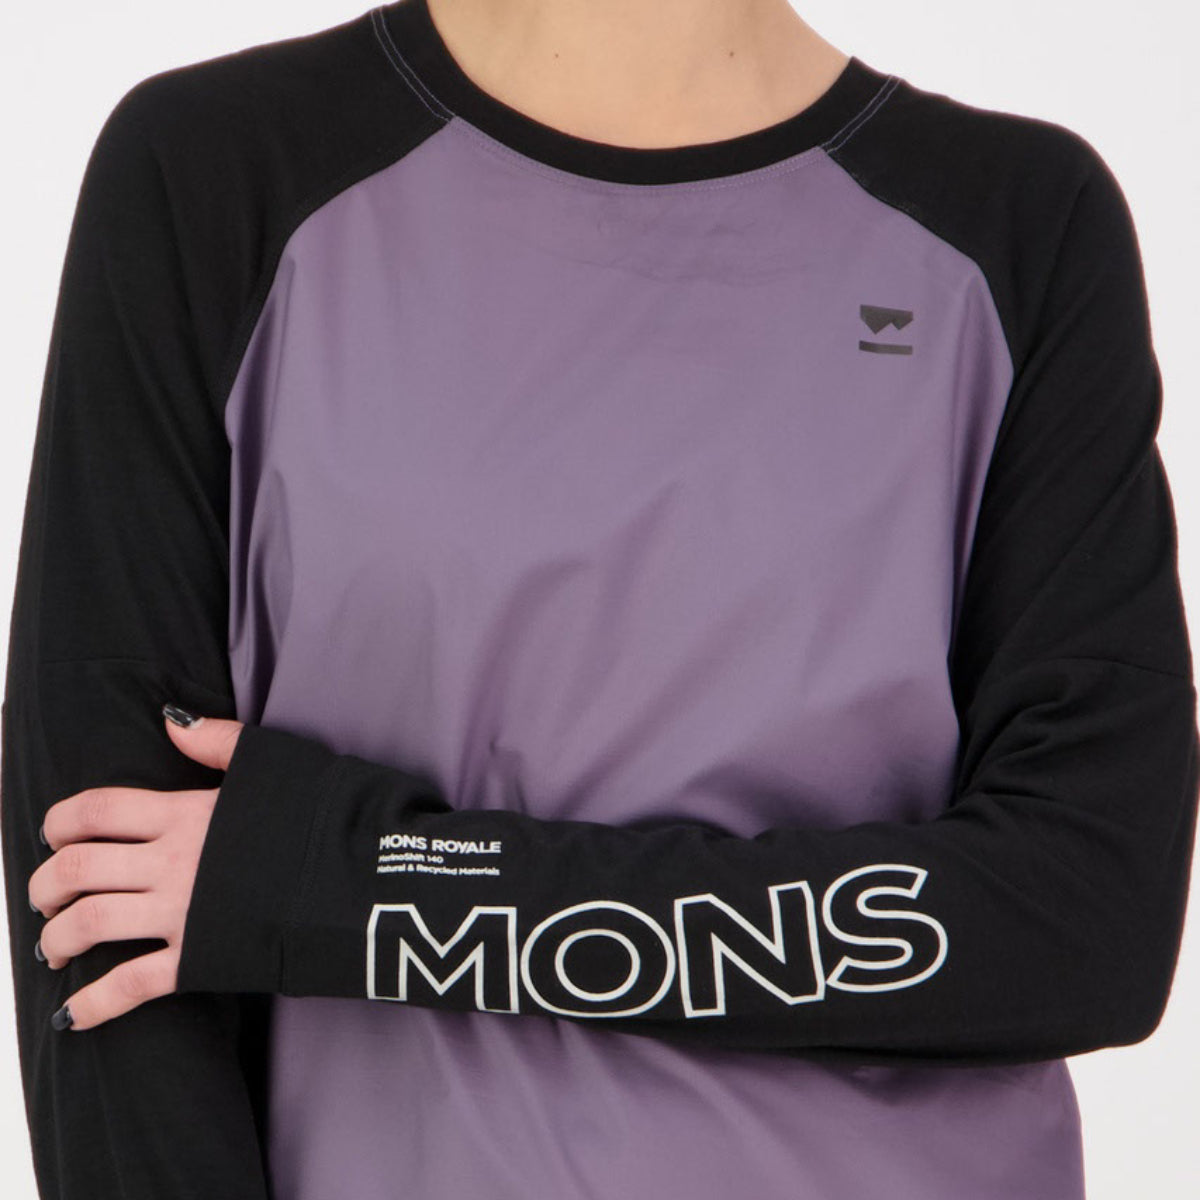 Mons Royale - Women's Tarn Merino Shift Wind Jersey - Shark / Black